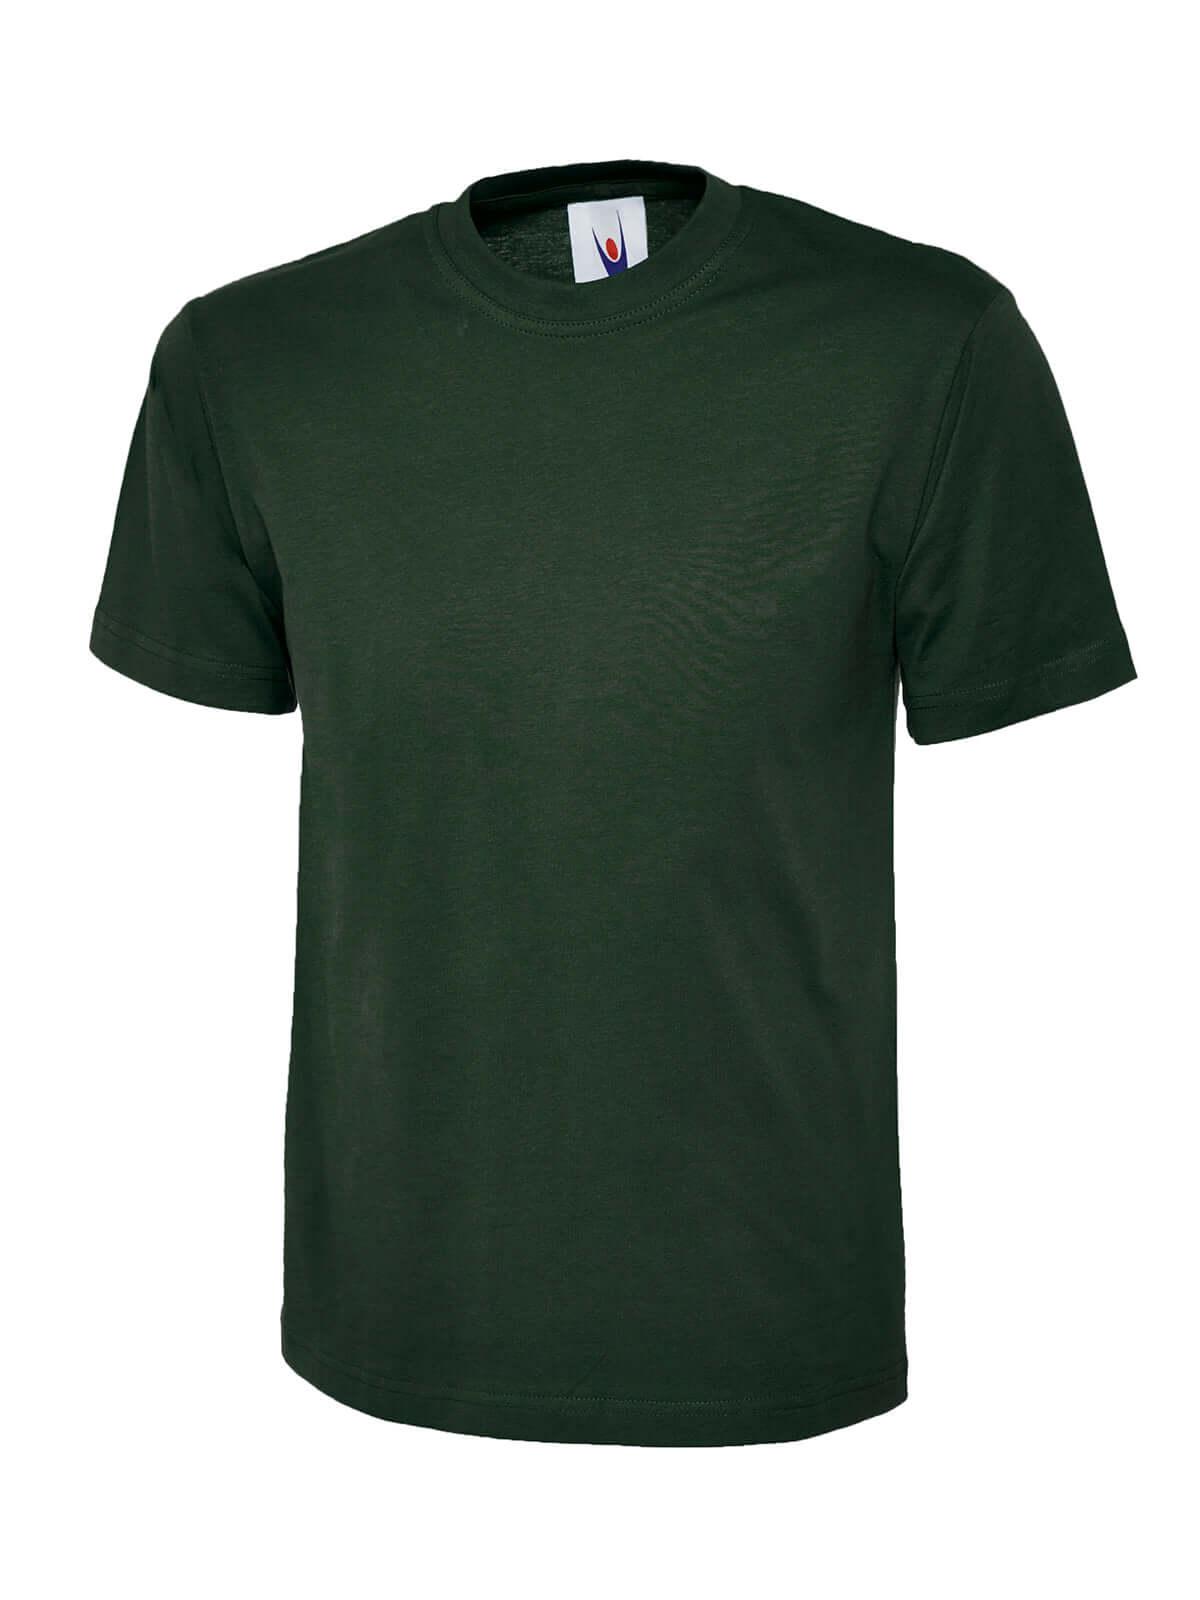 Pegasus Uniform Premium T-shirt - Bottle Green